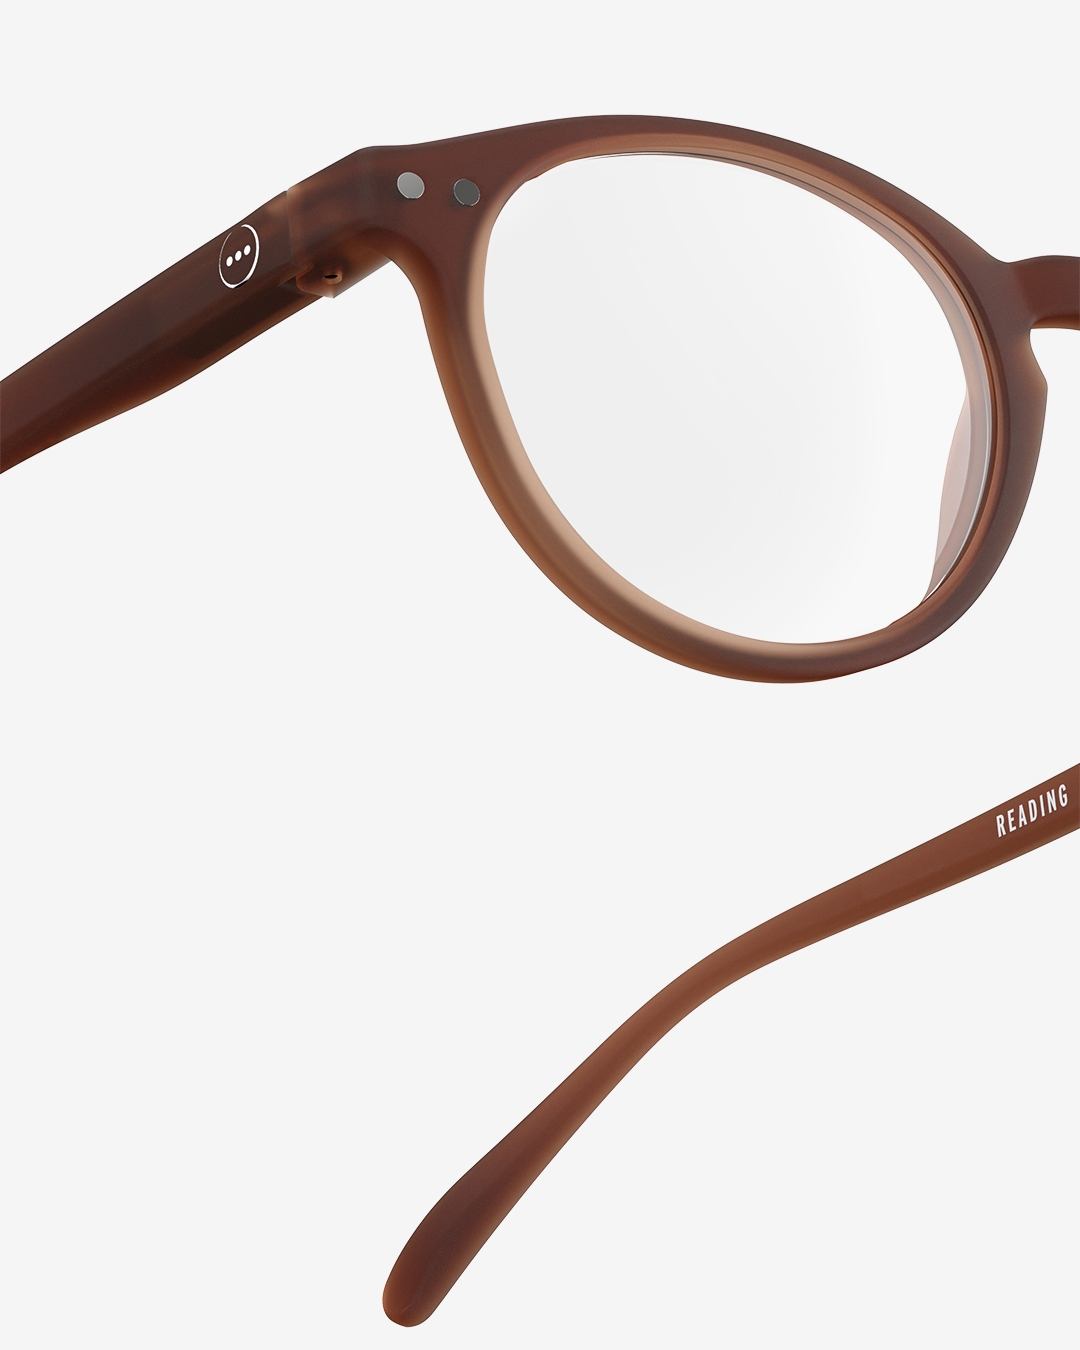 Trendy READING glasses #A Mahogany Pantos - Izipizi